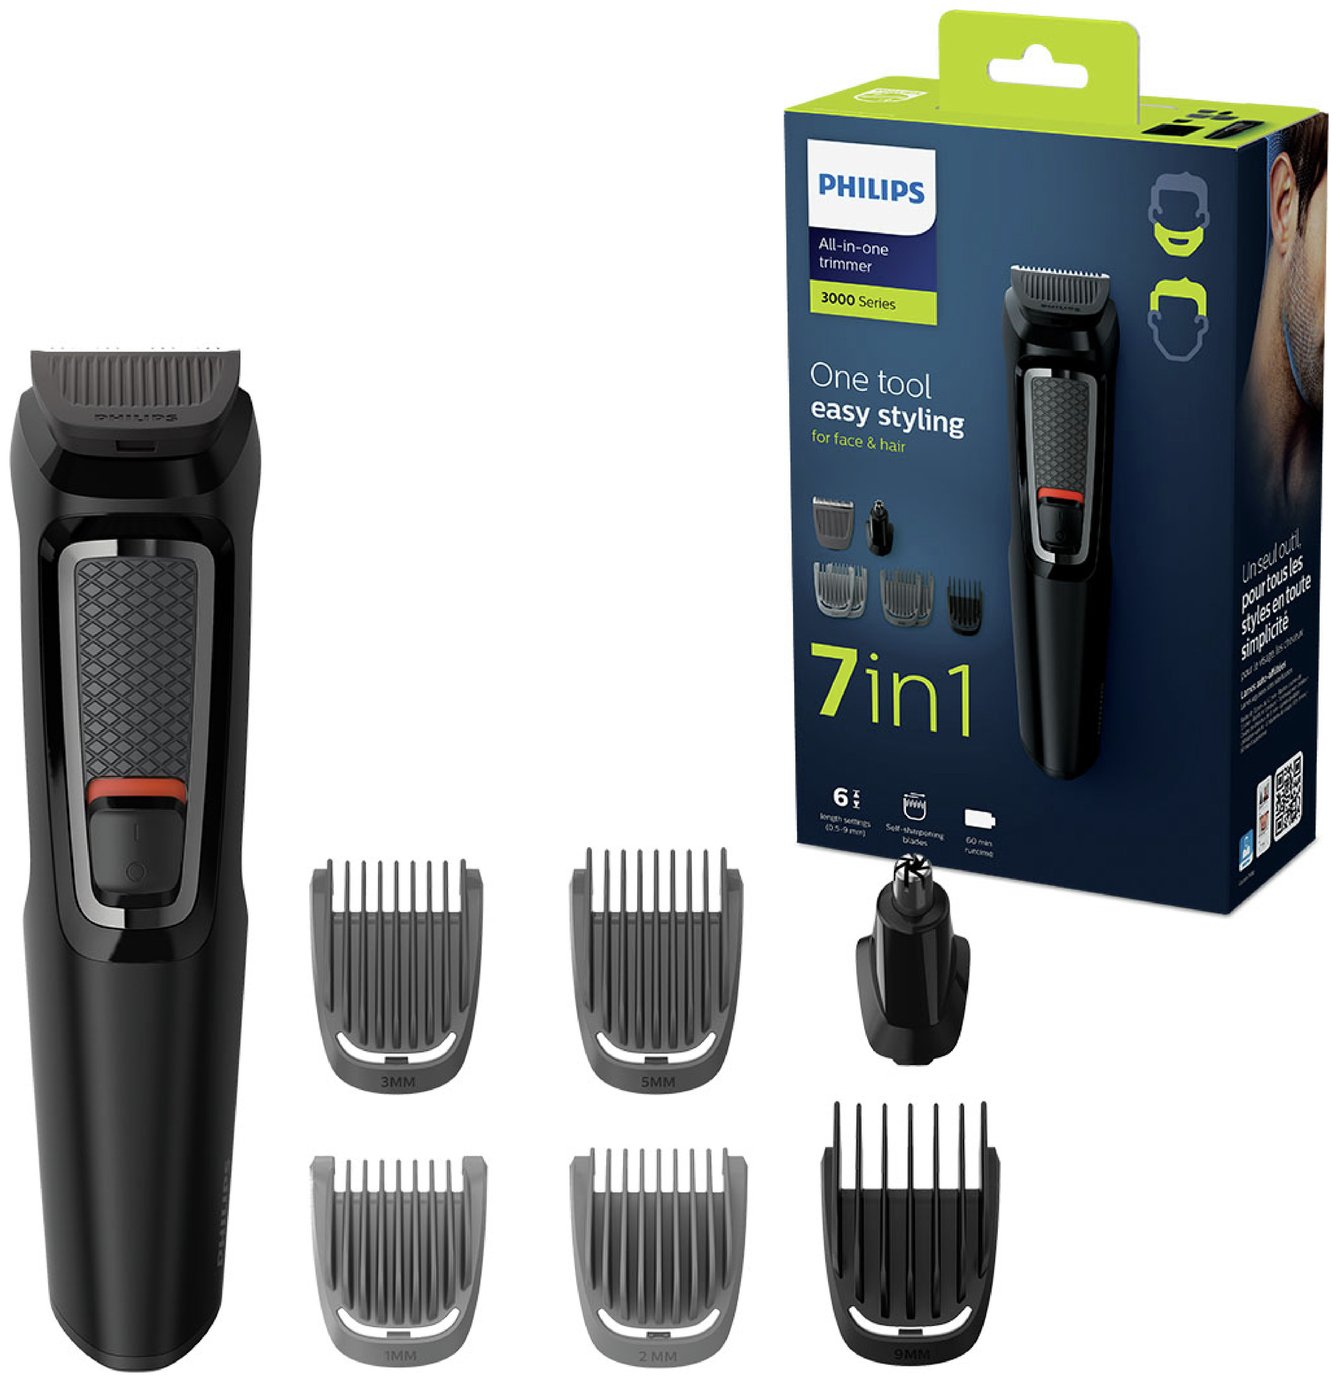 braun beard trimmer and hair clipper kit bt3940ts